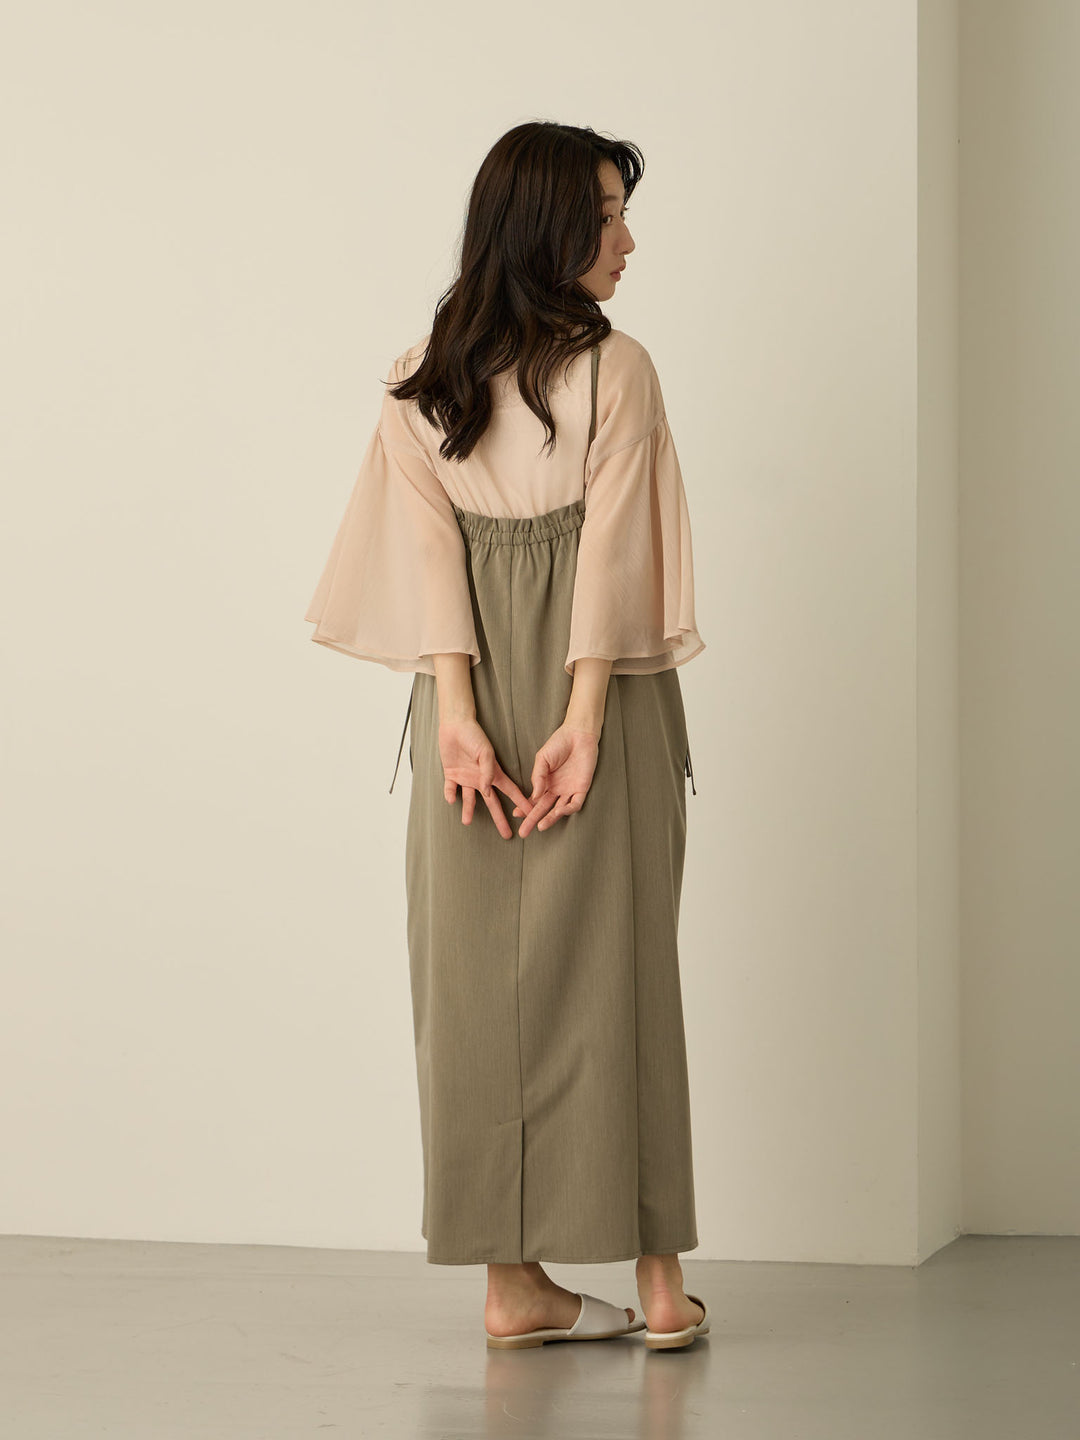 [Maternity/Nursing Wear] Sheer 2-way blouse and inner set Pink beige